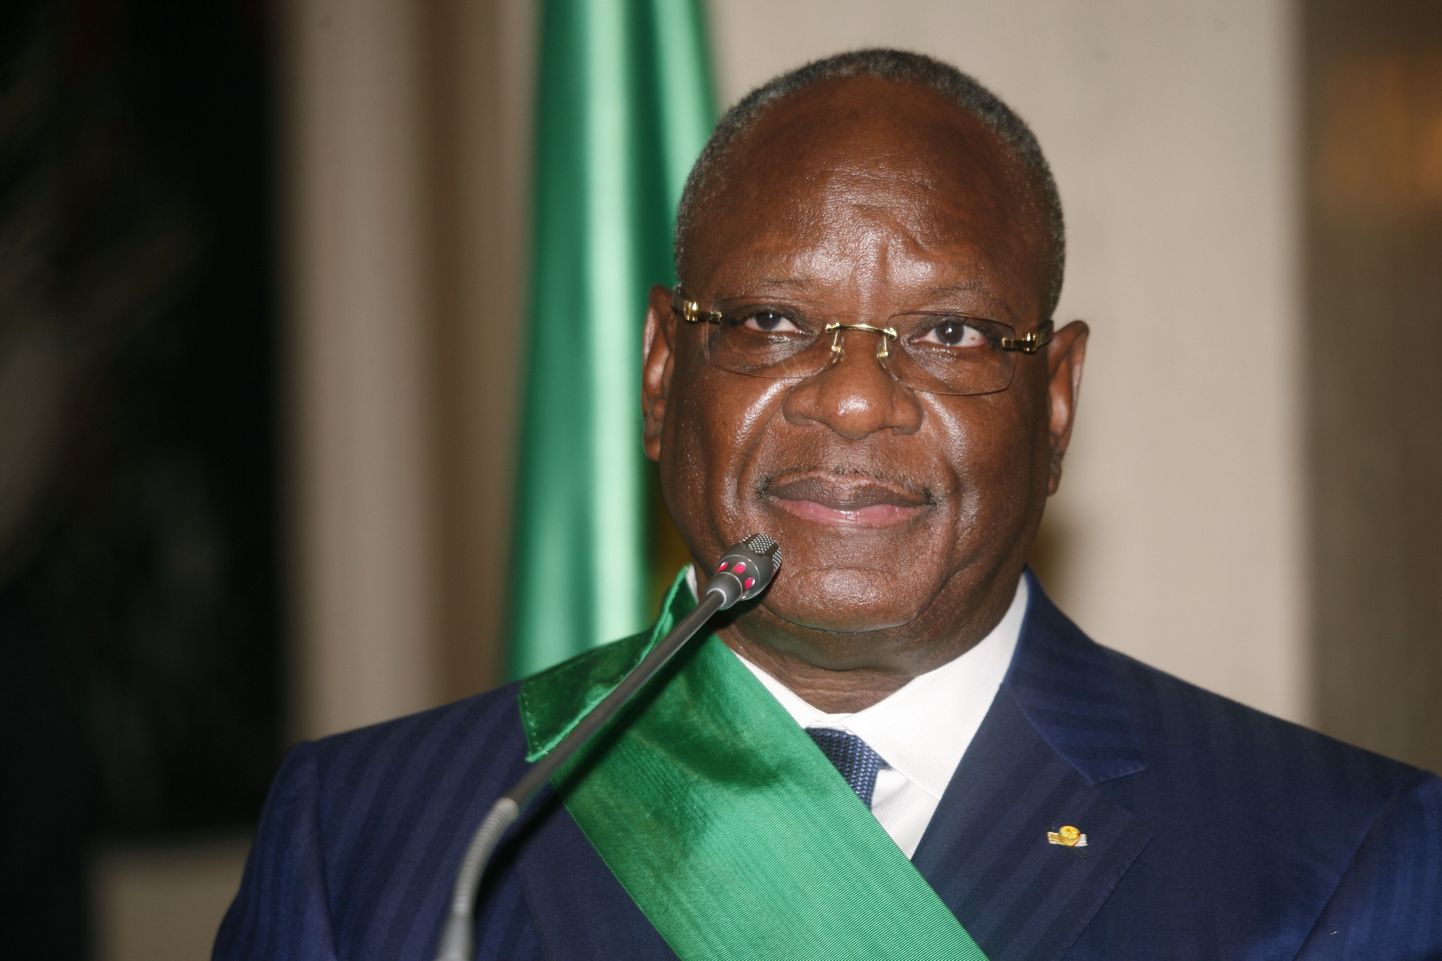 Mali president Ibrahim Boubacar Keita